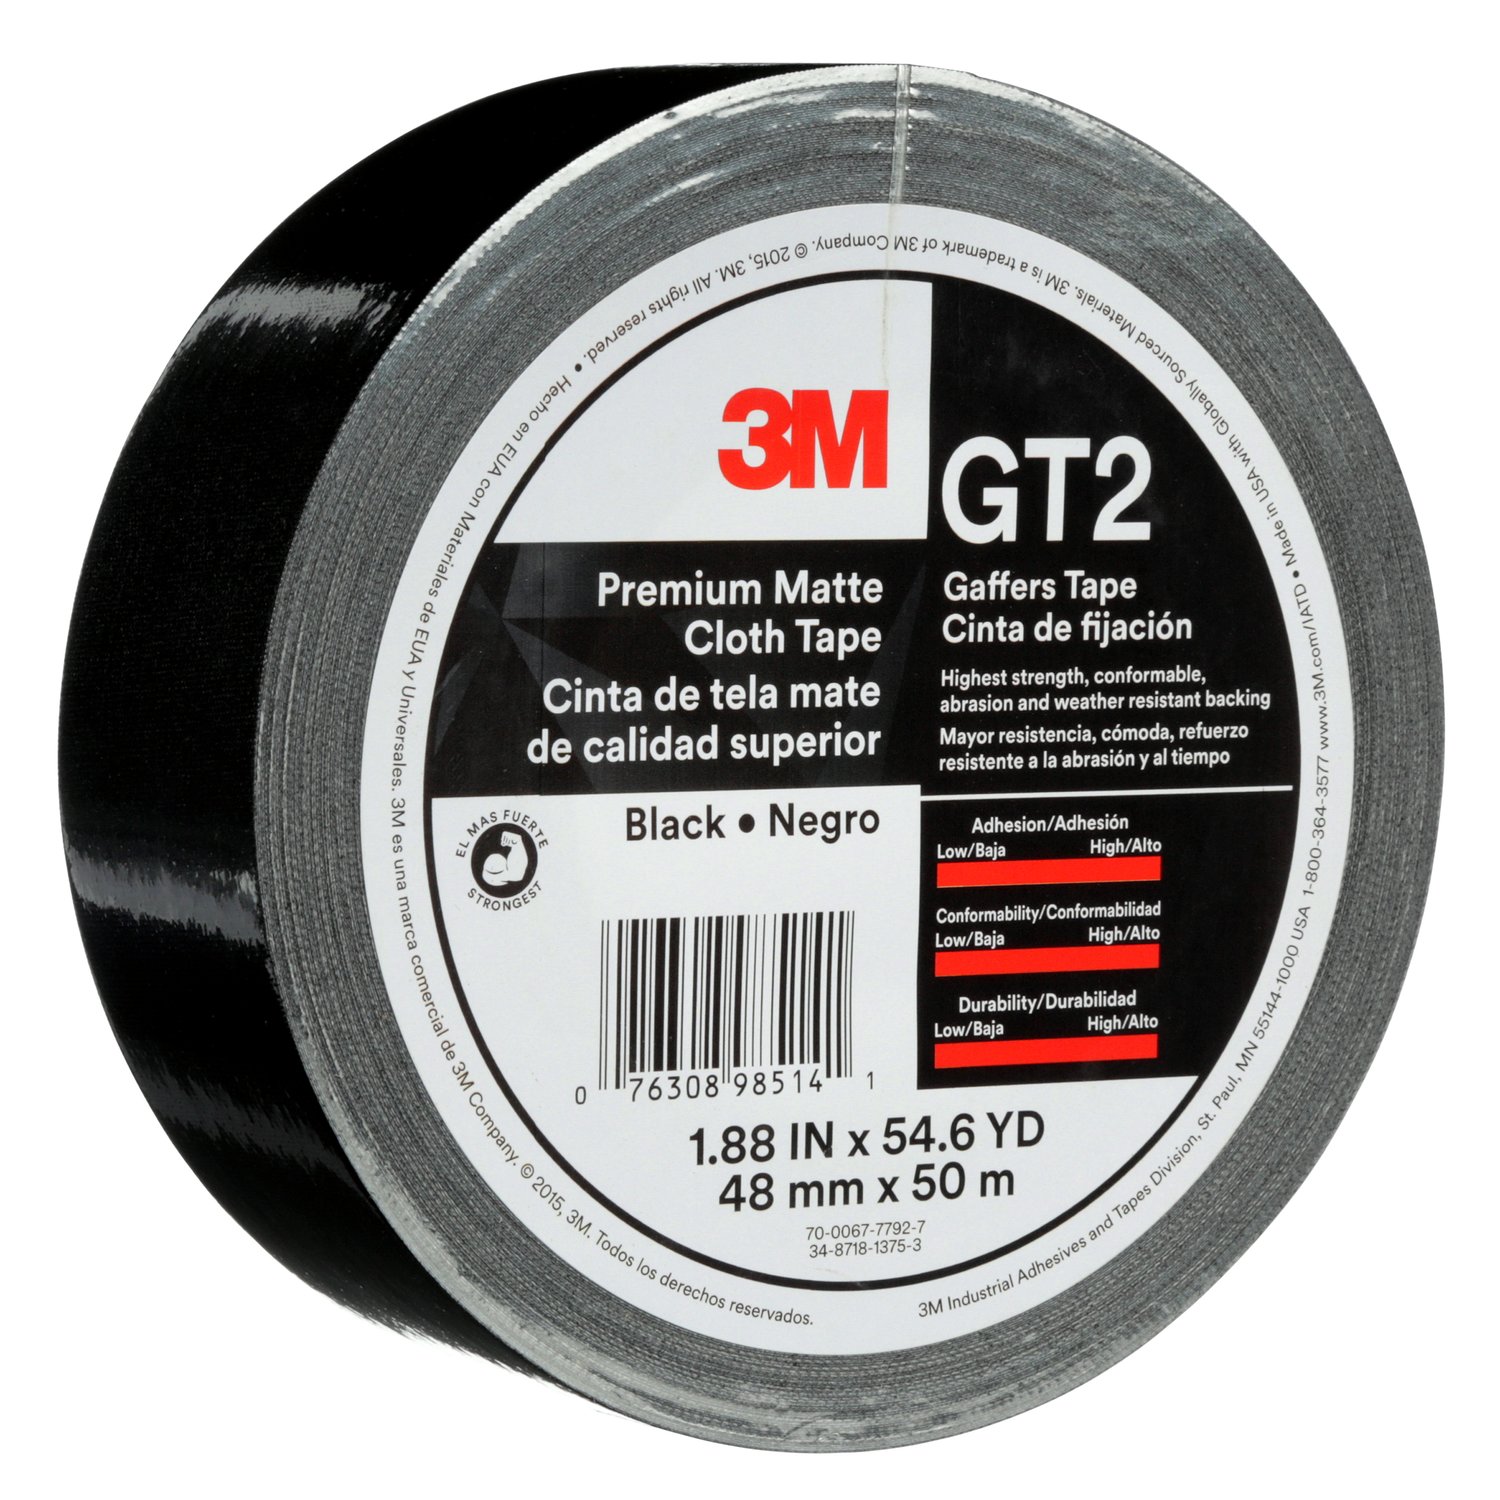 7010336132 - 3M Premium Matte Cloth (Gaffers) Tape GT2, Black, 48 mm x 50 m, 11 mil,
24/Case